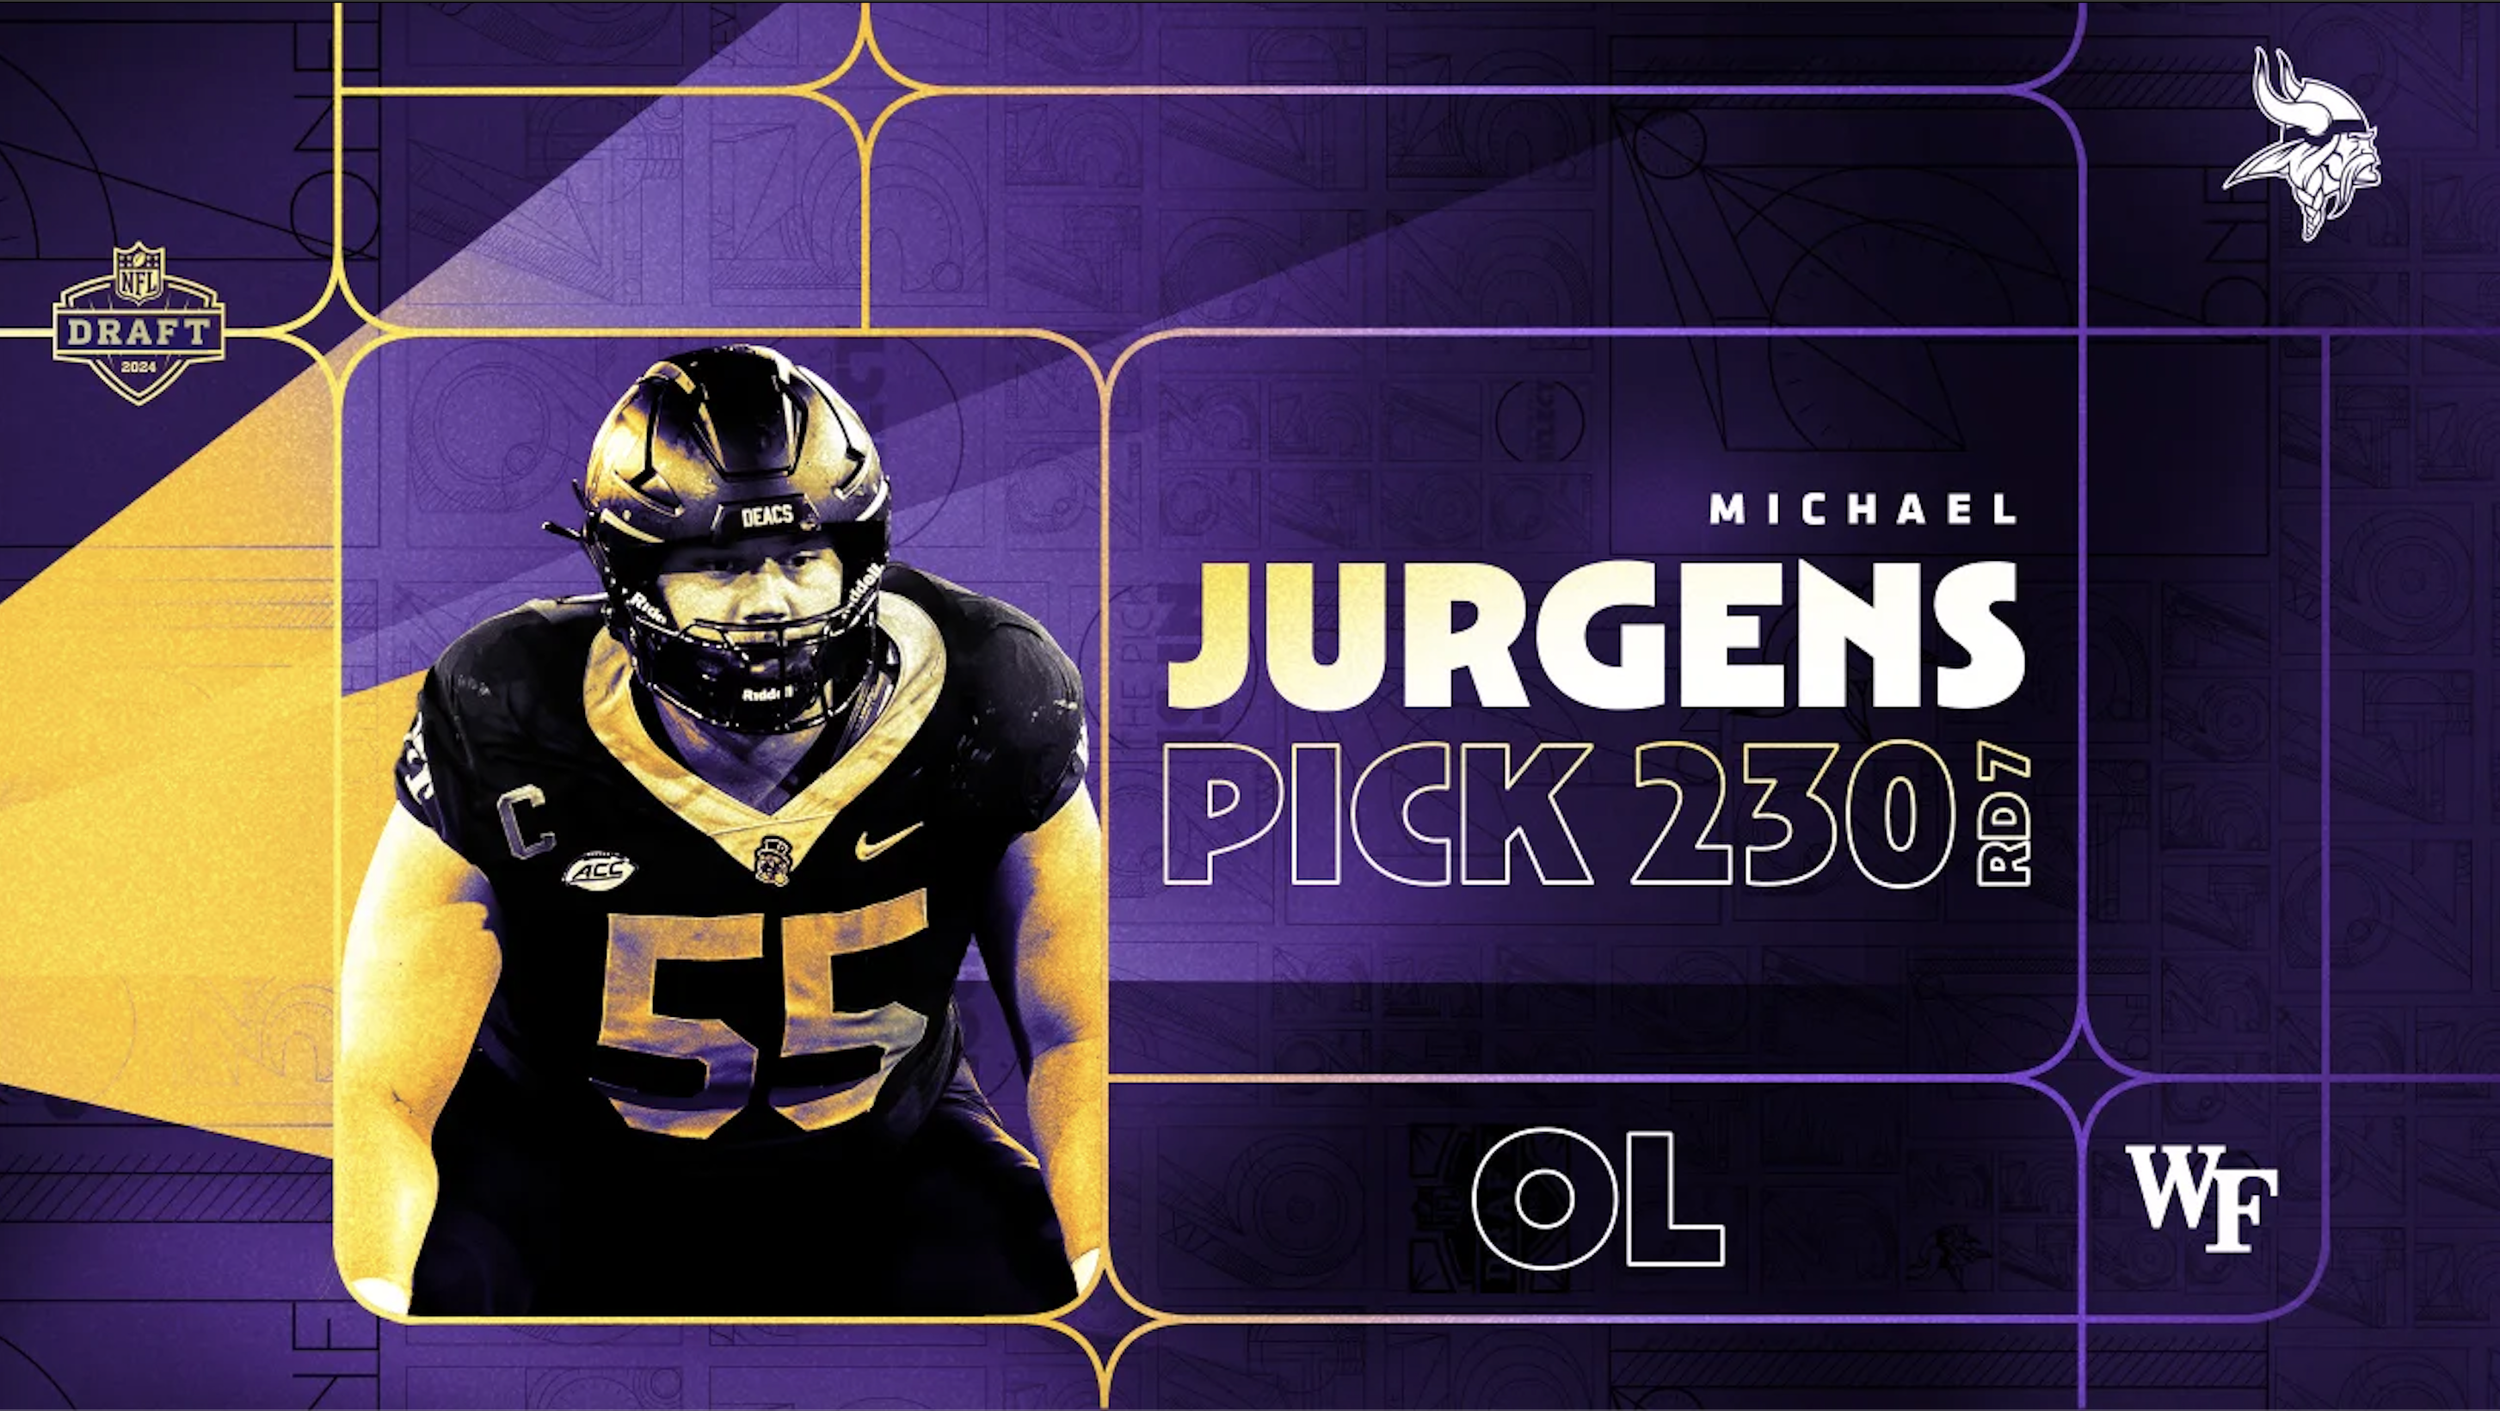 Vikings Draft Offensive Lineman Michael Jurgens in the 7th Round